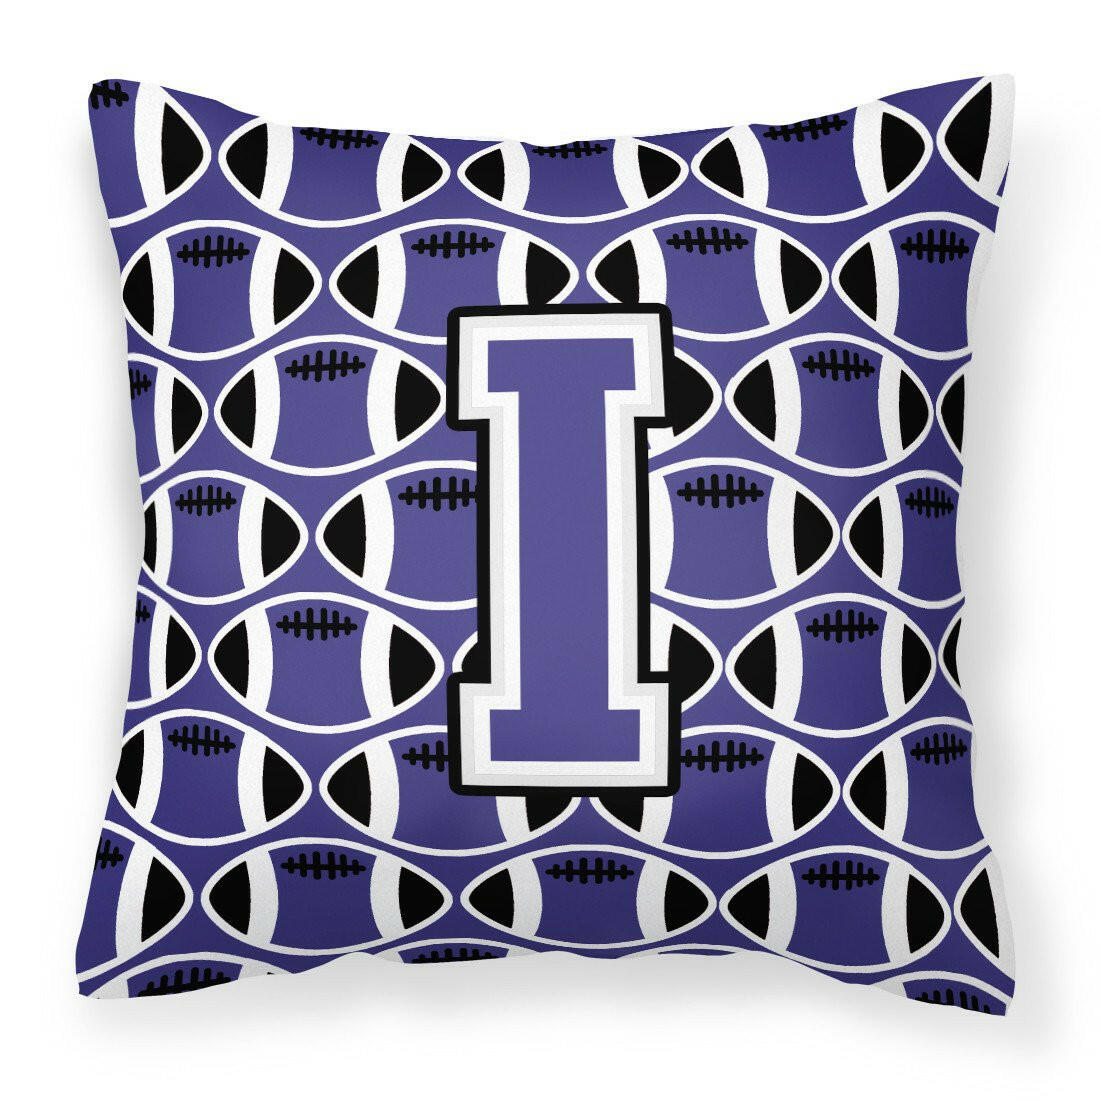 Letter I Football Purple and White Fabric Decorative Pillow CJ1068-IPW1414 by Caroline's Treasures